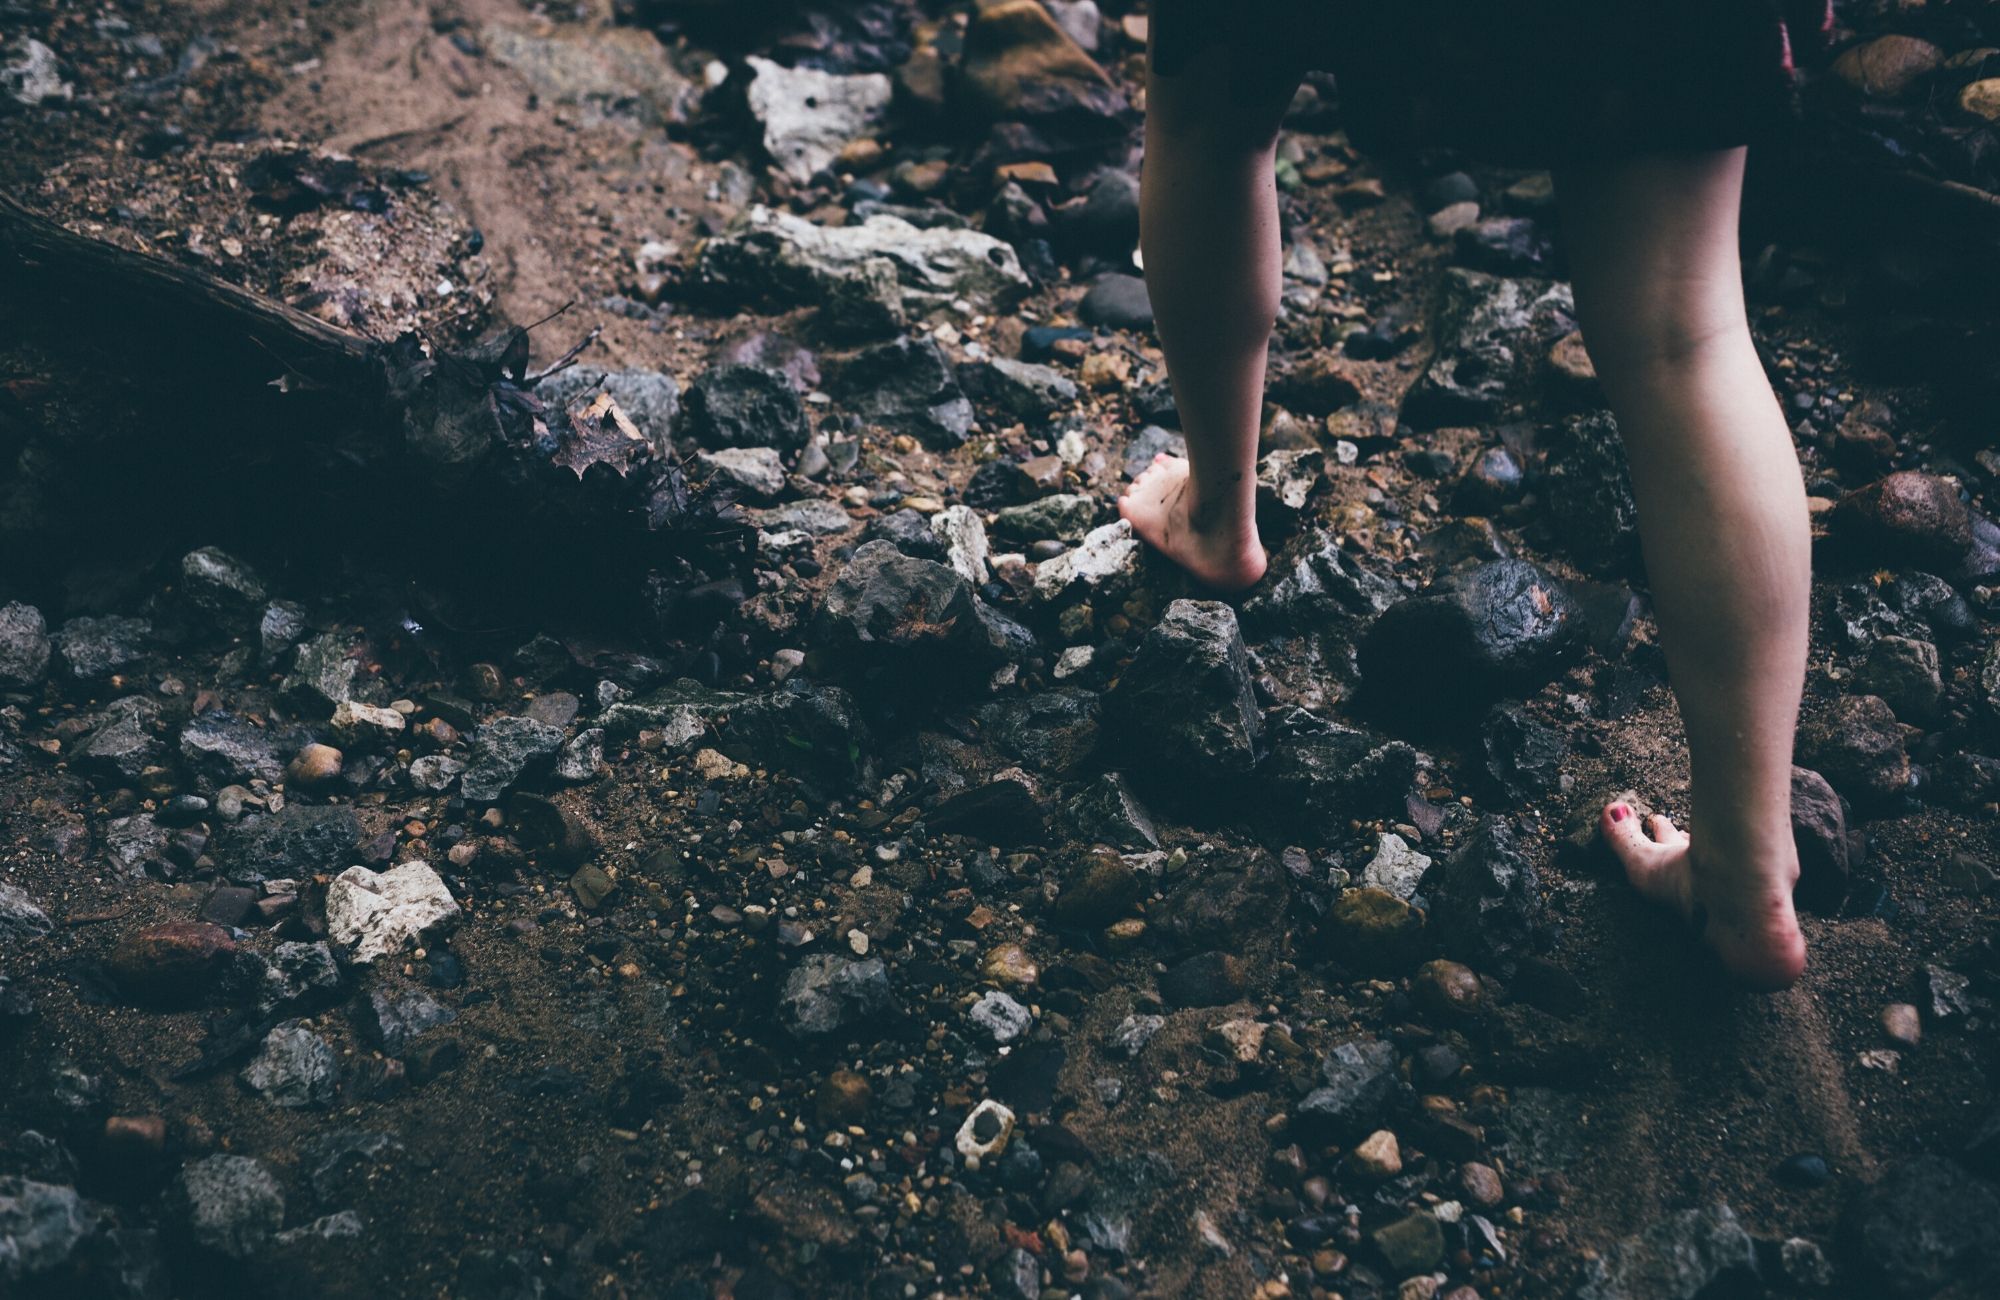 A barefoot person traversing rough terrain